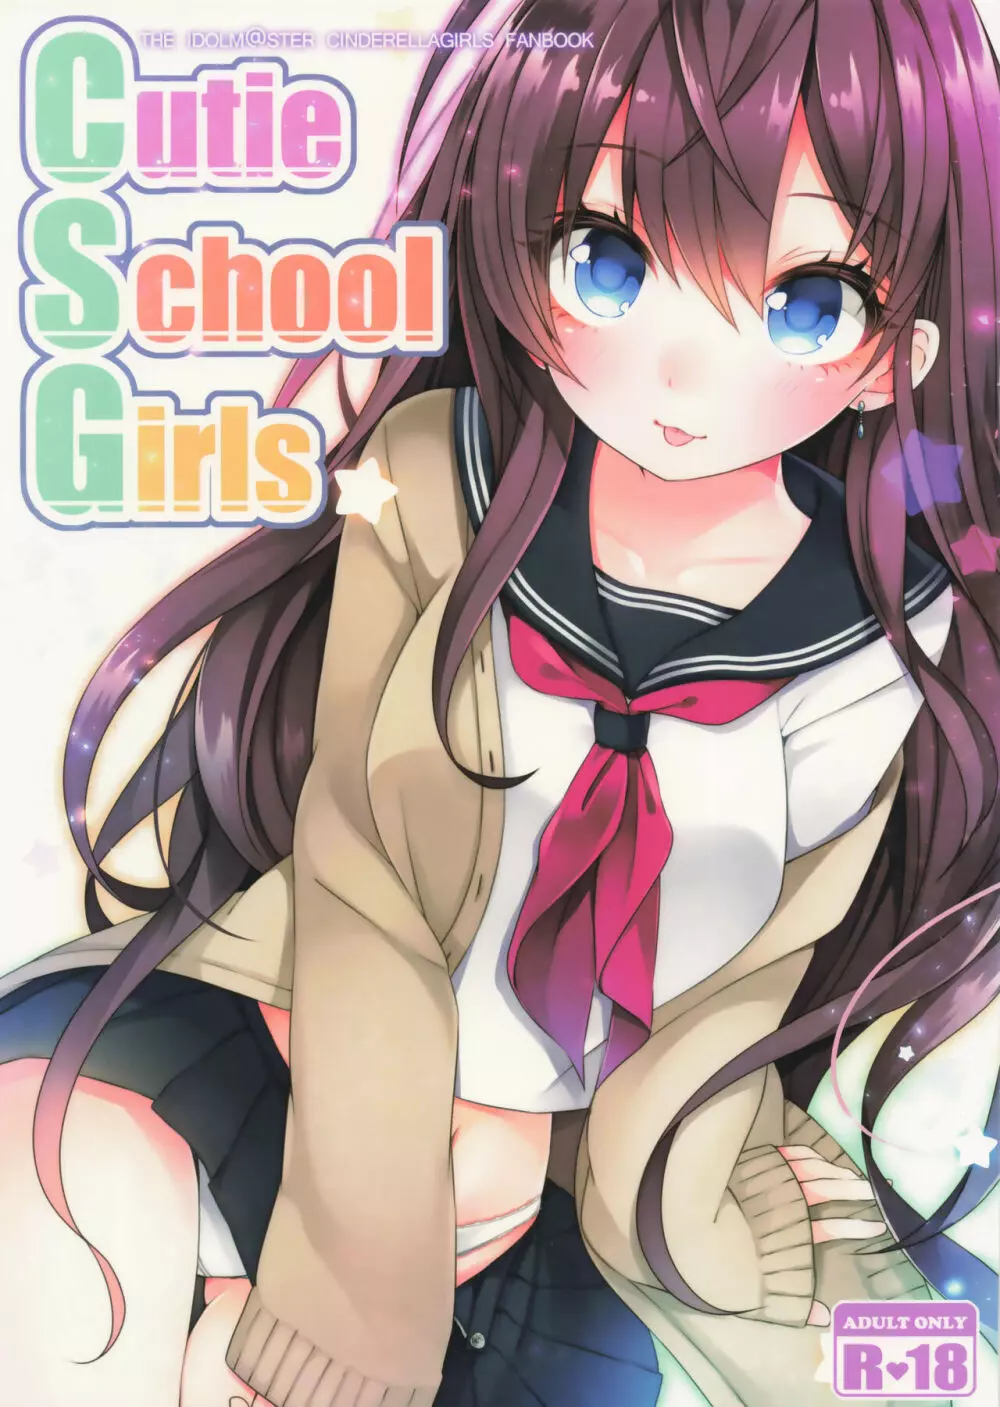 Cutie School Girls